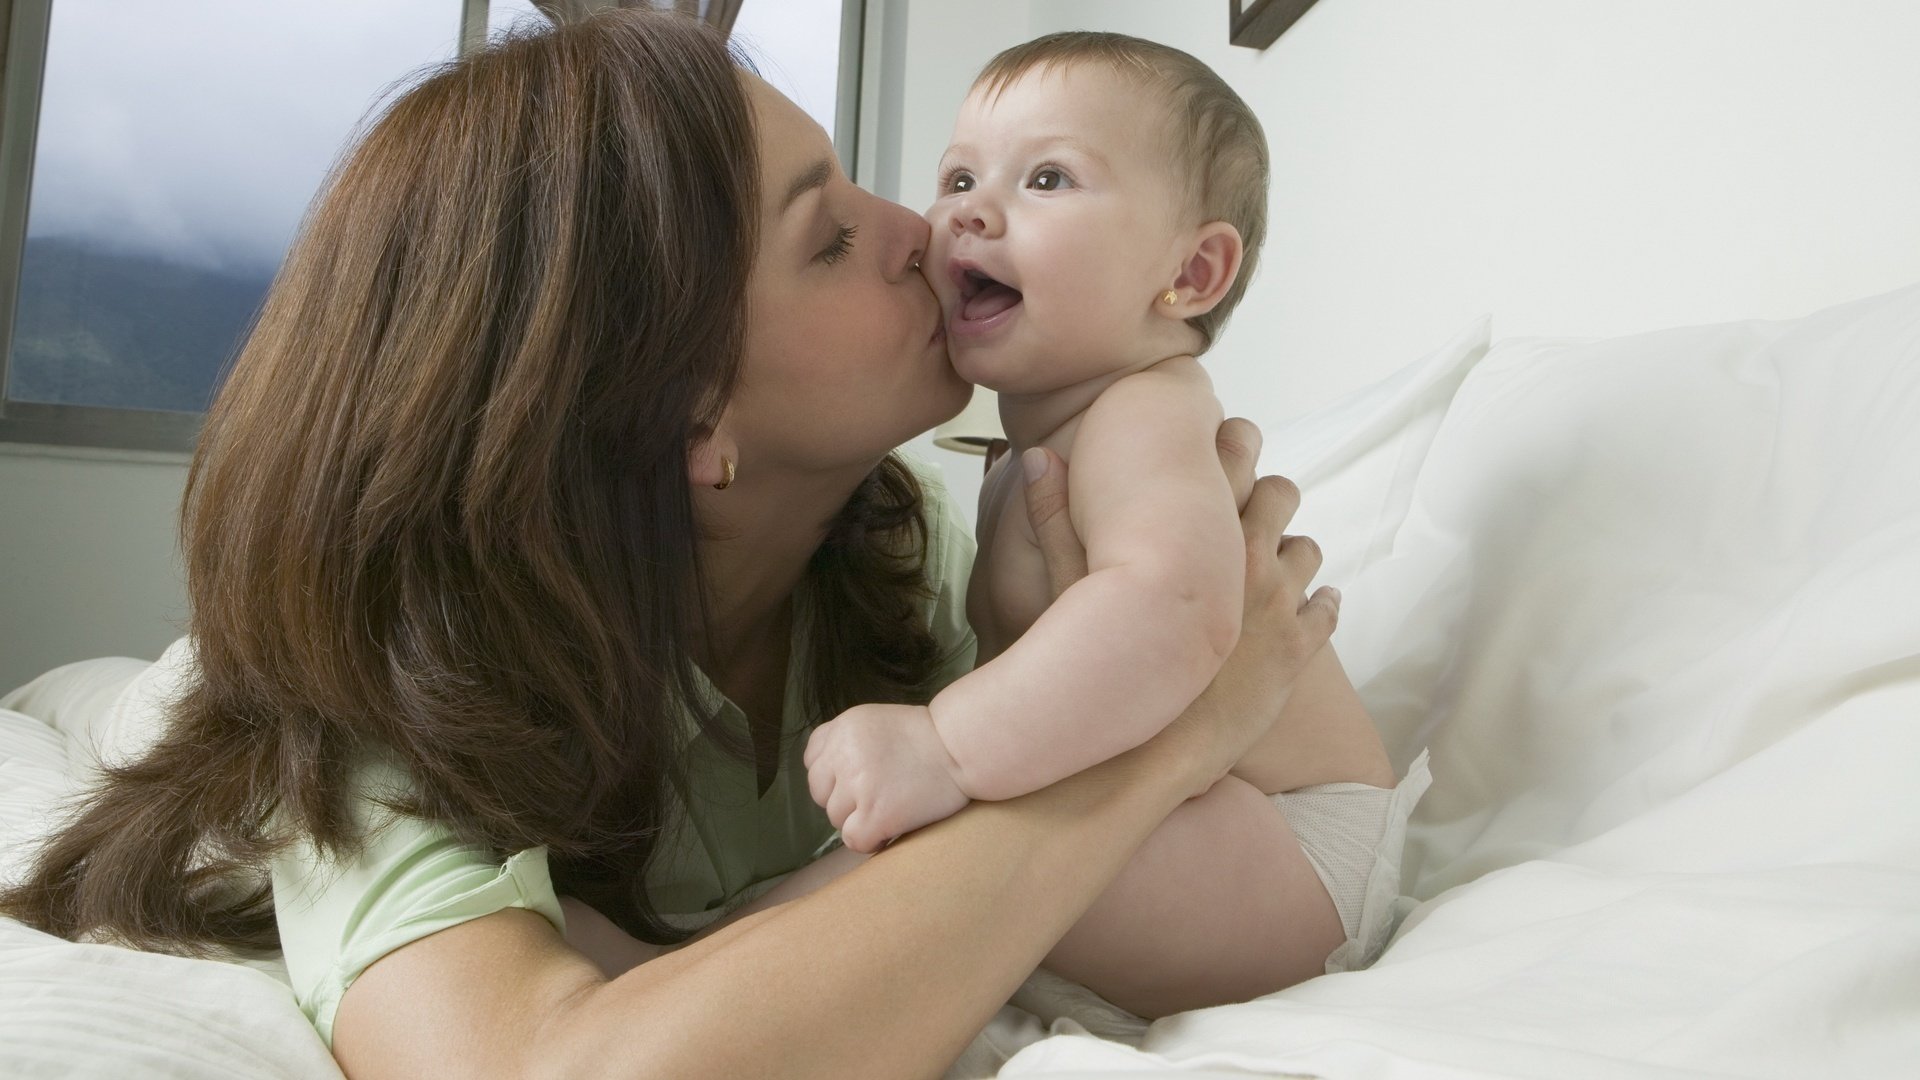 Throated moms. Малыш и мама. Женщина с ребенком. Мама целует малыша. Мама картинка для детей.